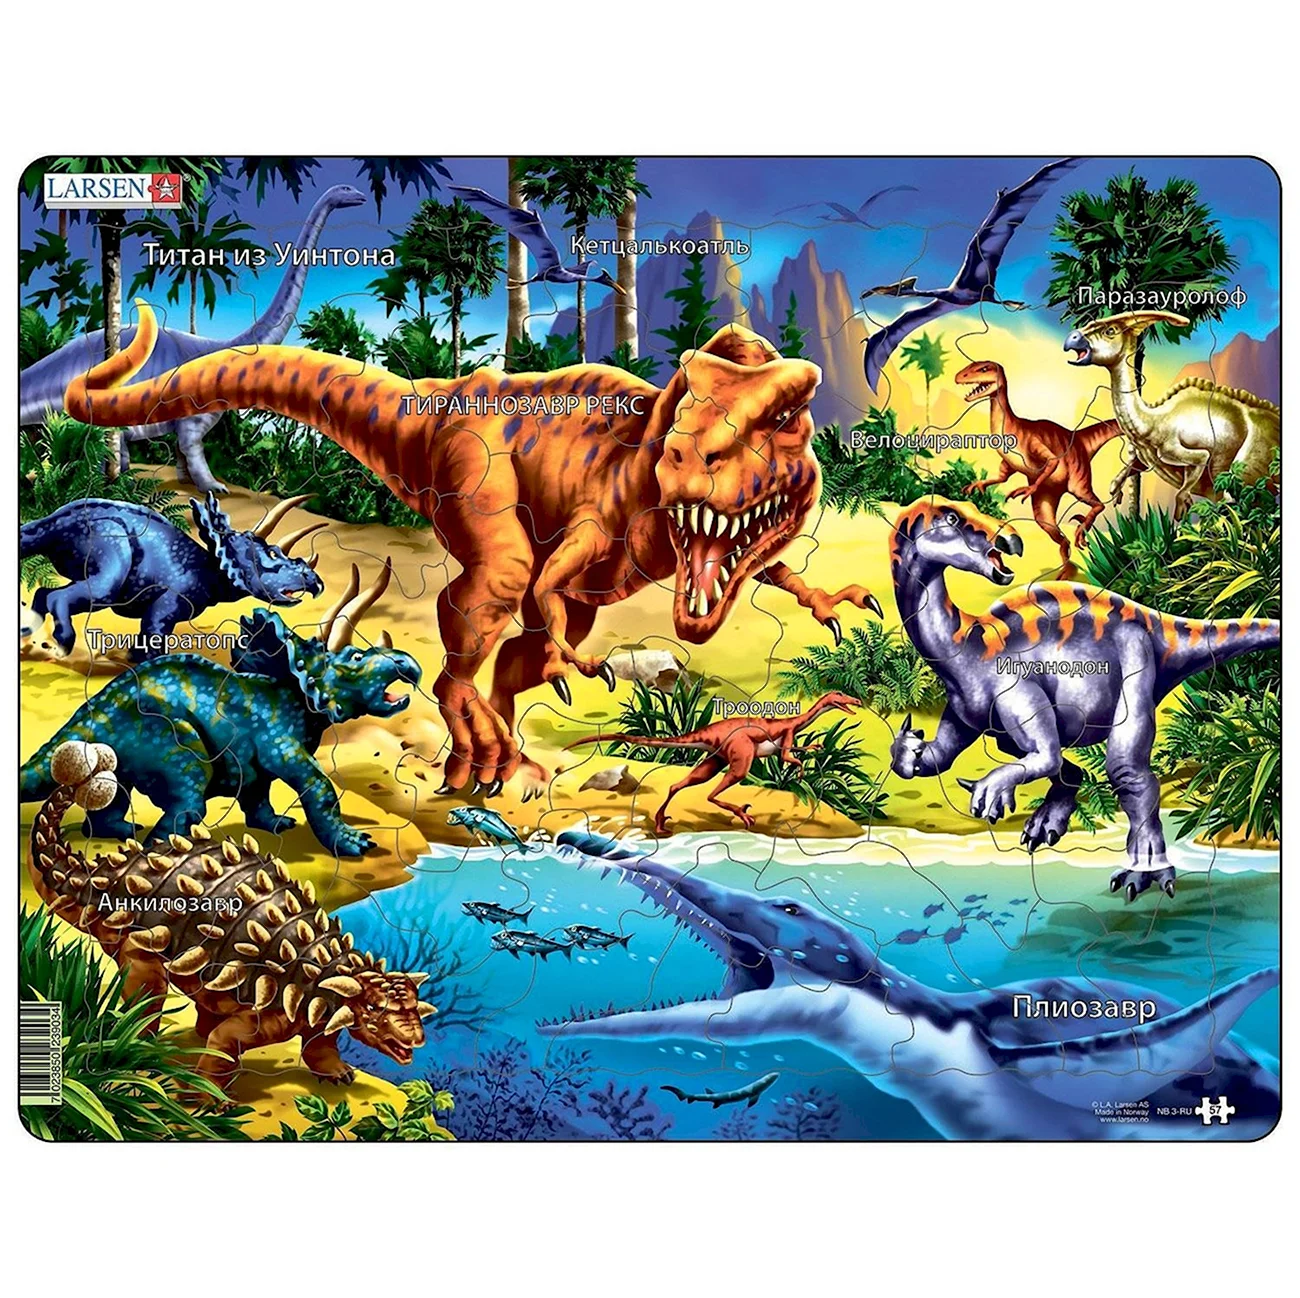 Larsen пазл динозавры nb3. Картинка